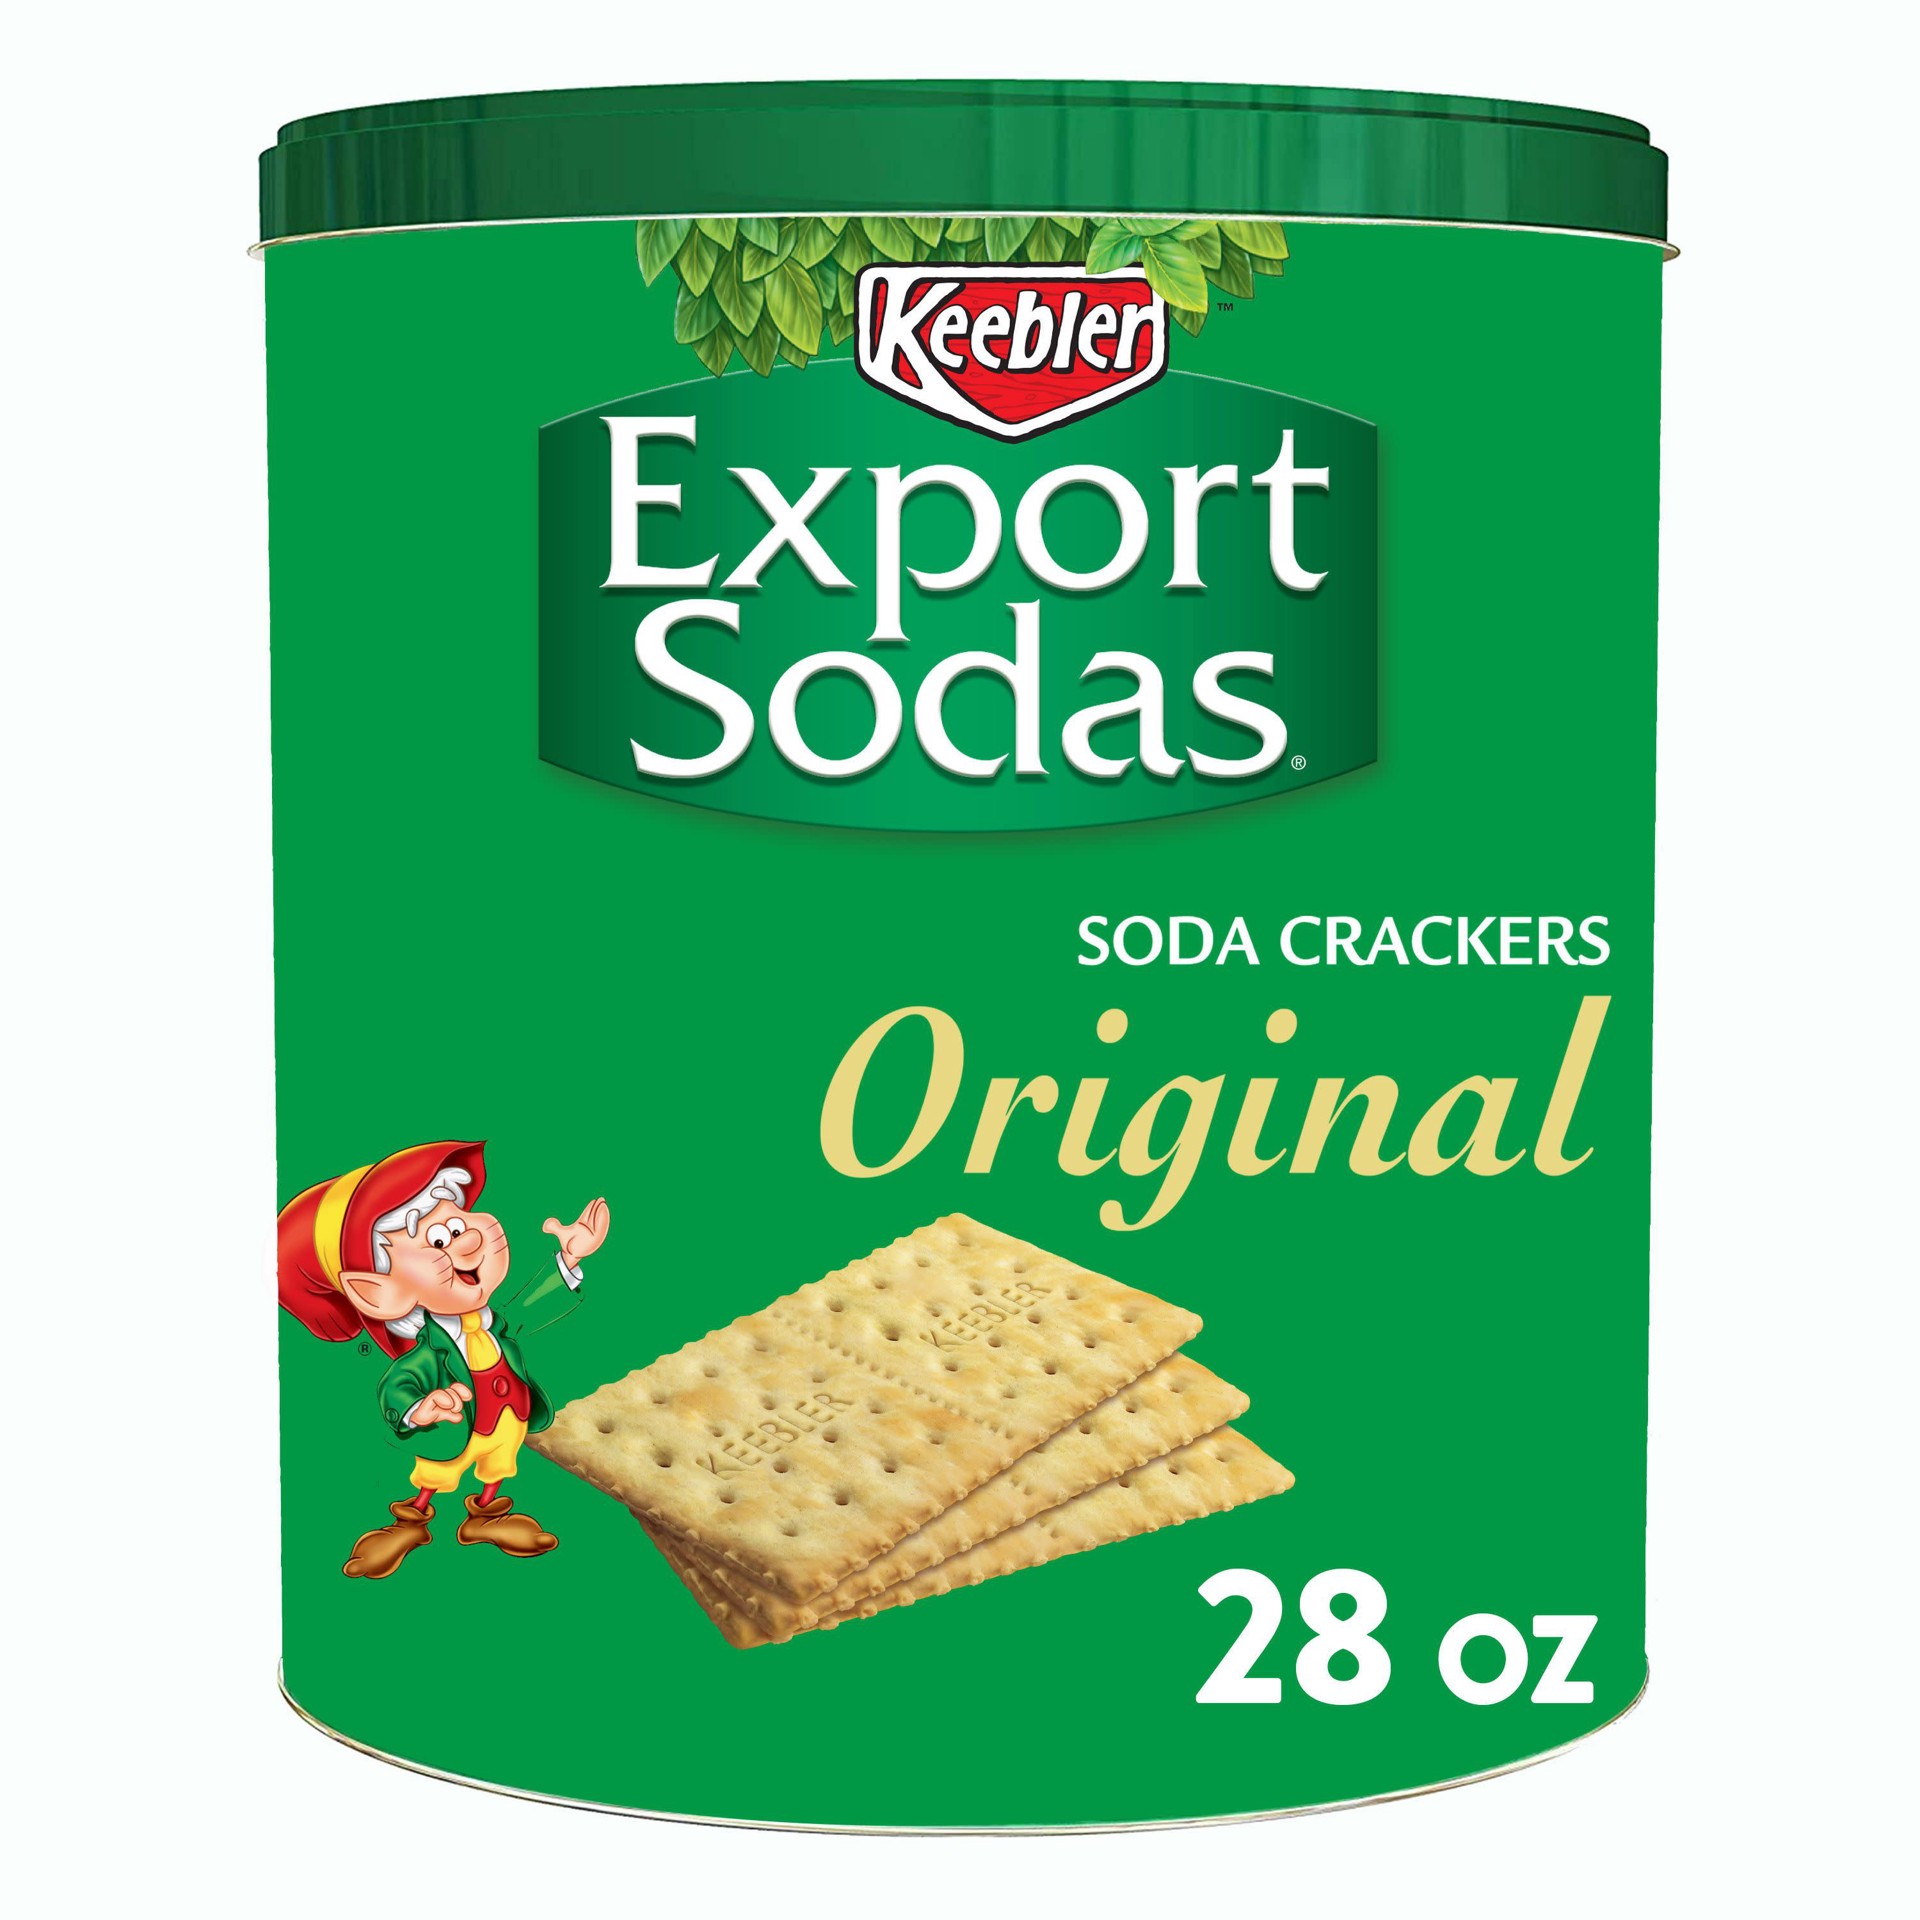 slide 1 of 63, Keebler Export Sodas Soda Crackers, Original, 28 oz, 28 oz